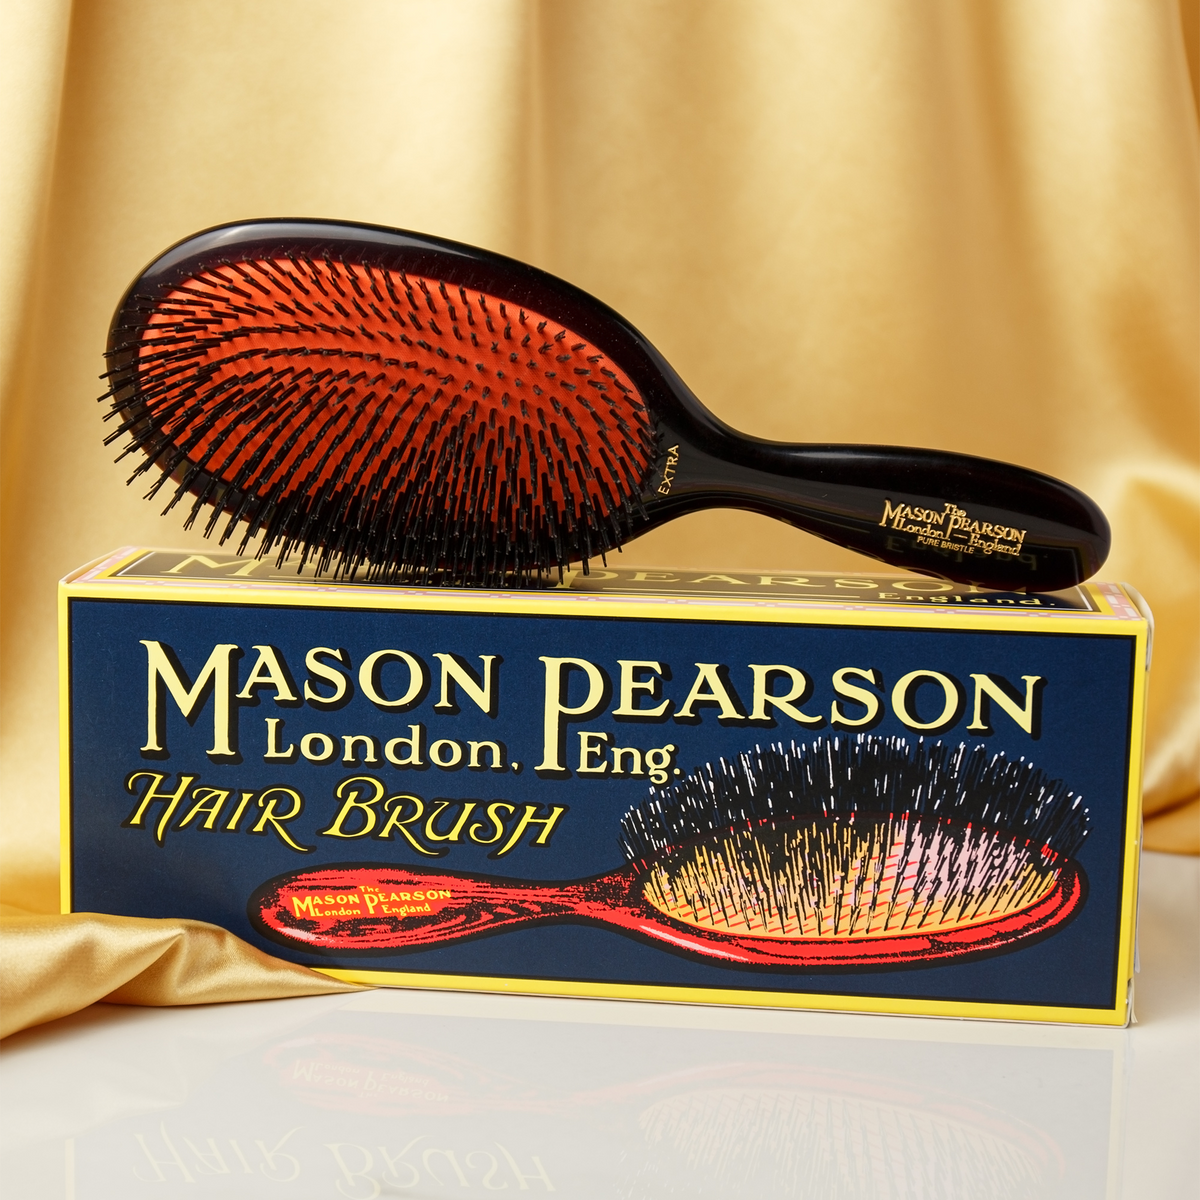 Mason Pearson Popular Extra Brush Stiff Bristle – Smallflower Boar